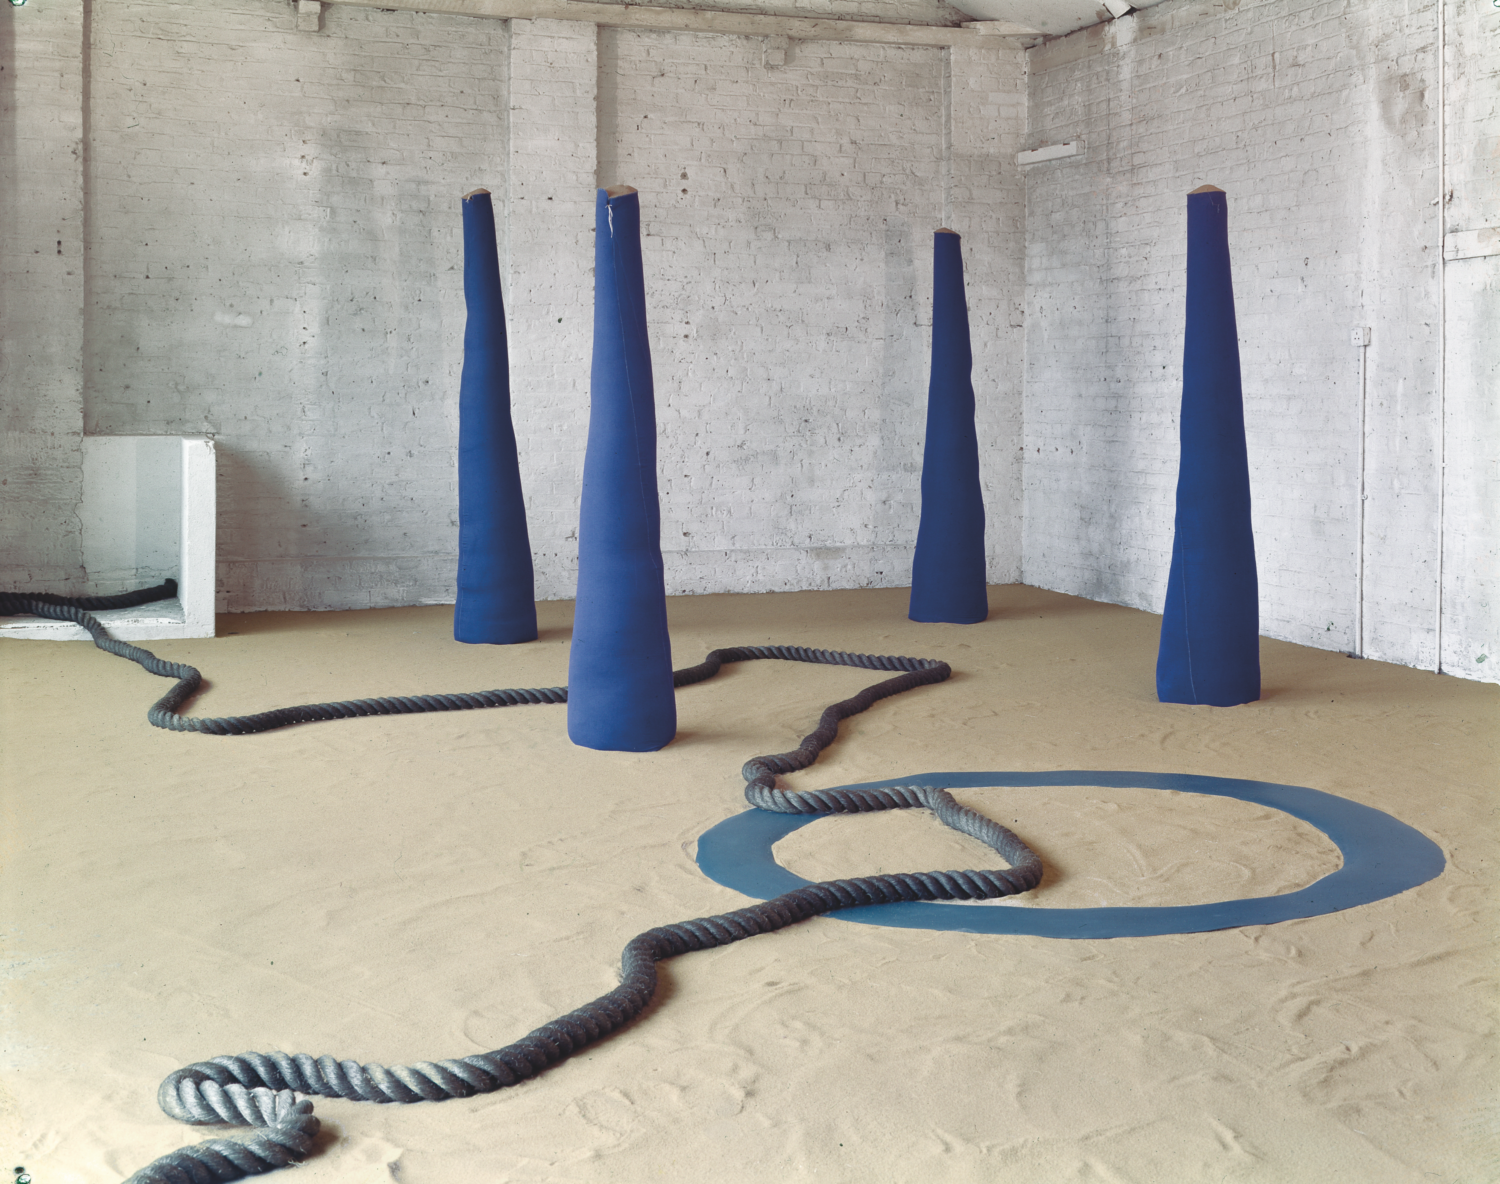 4 casb 2 ’67, ringl 1 ’67, rope (gr 2sp 60) 6 ’67, one space sand sculpture ’67